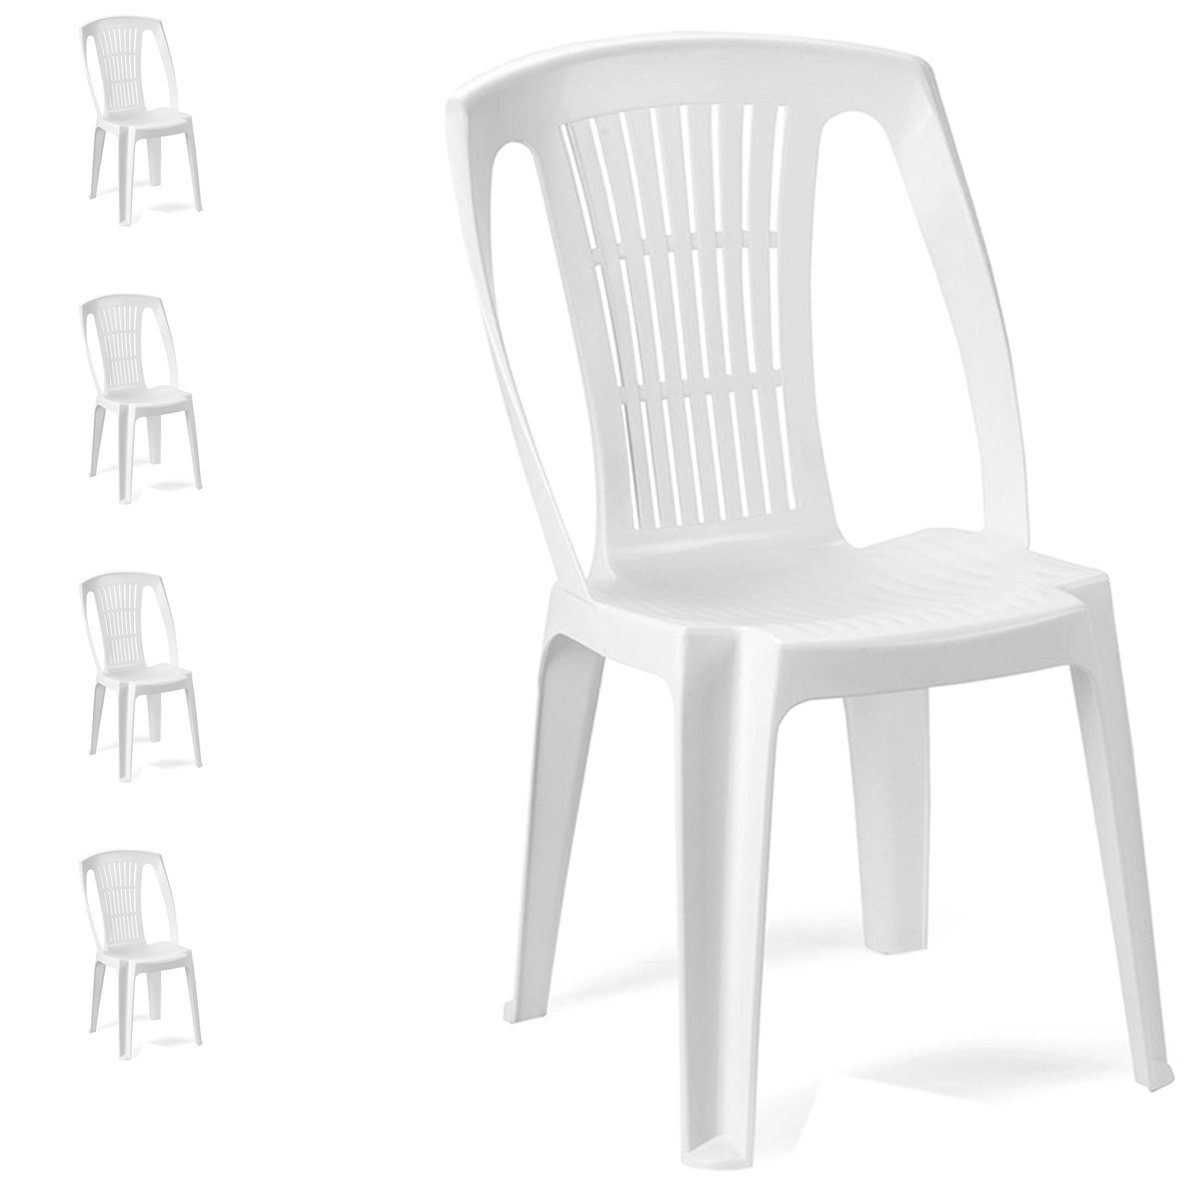 Mojawo Armlehnstuhl 6 Stück Stapelstuhl Kunststoff Weiß